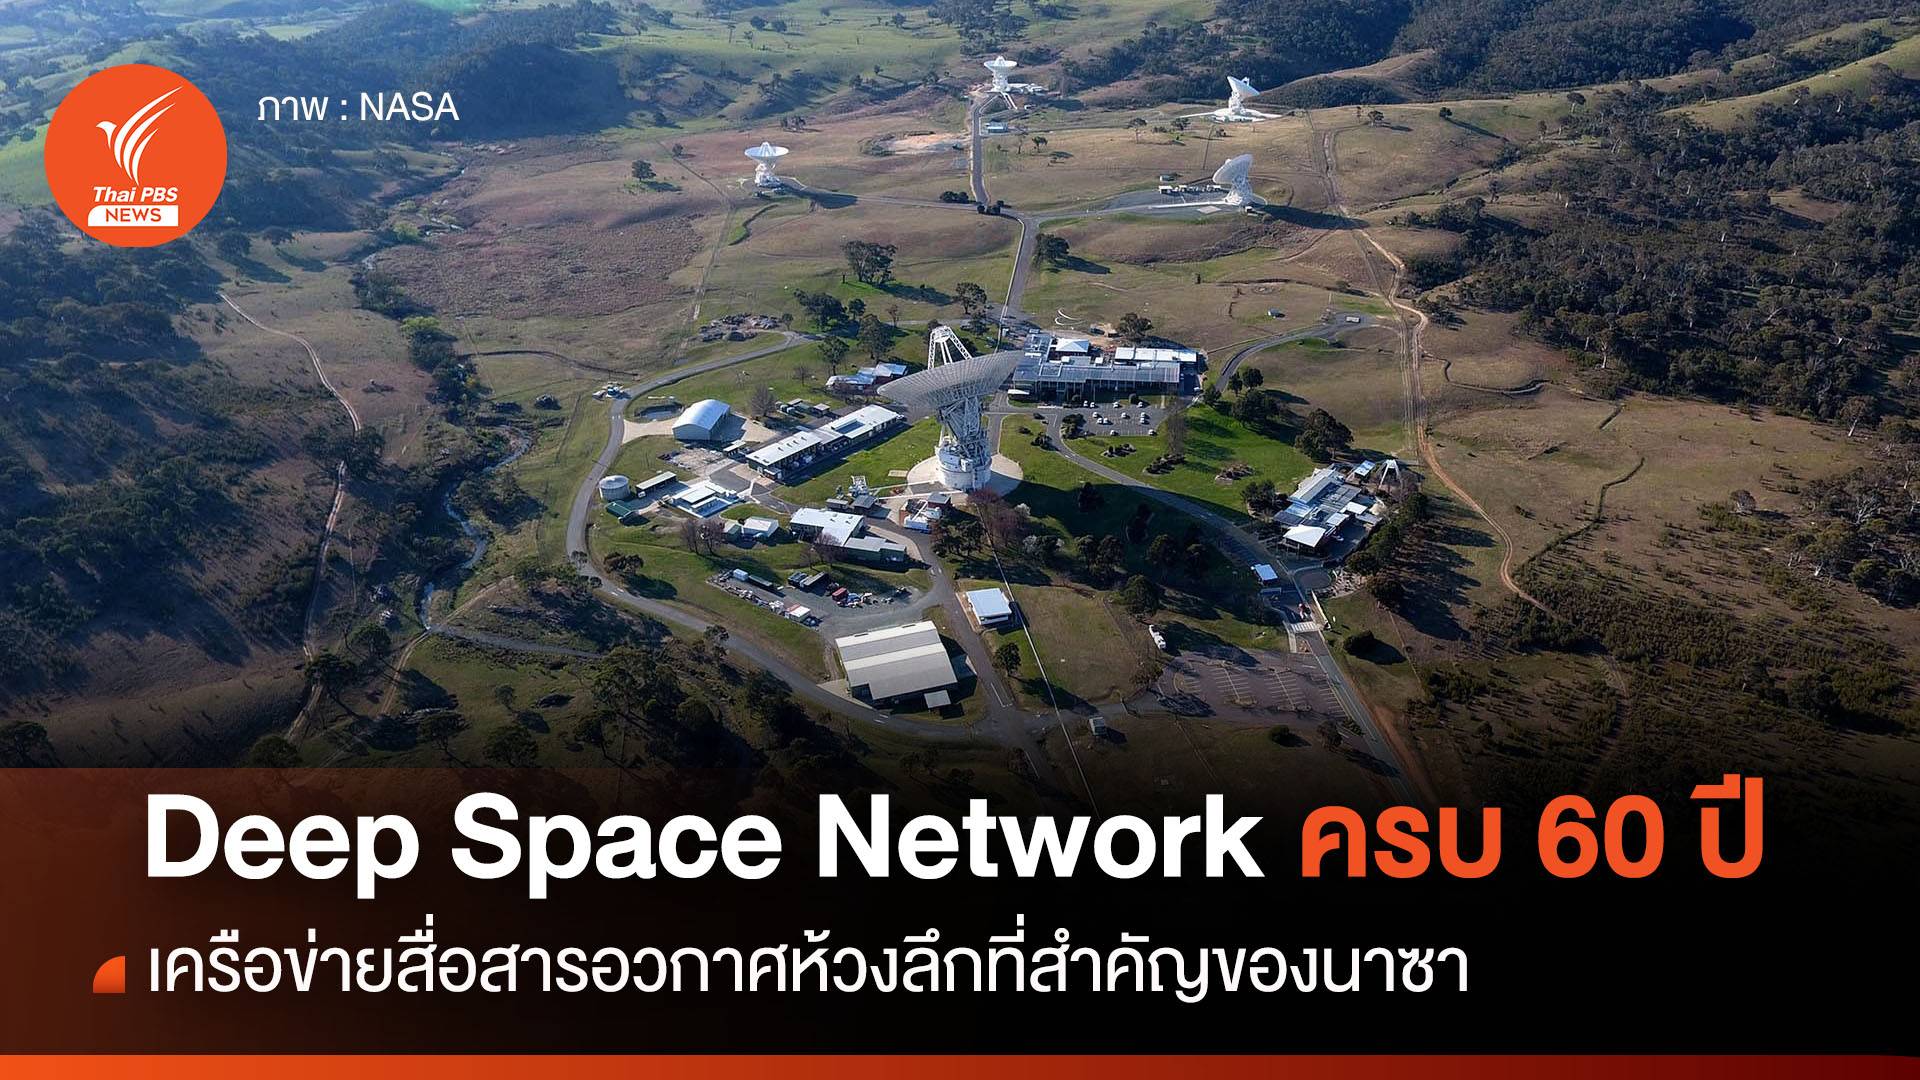 Deep Space Network เครือข่ายสื่อสาร “ยานอวกาศห้วงลึก” ของนาซาอายุครบ 60 ปี